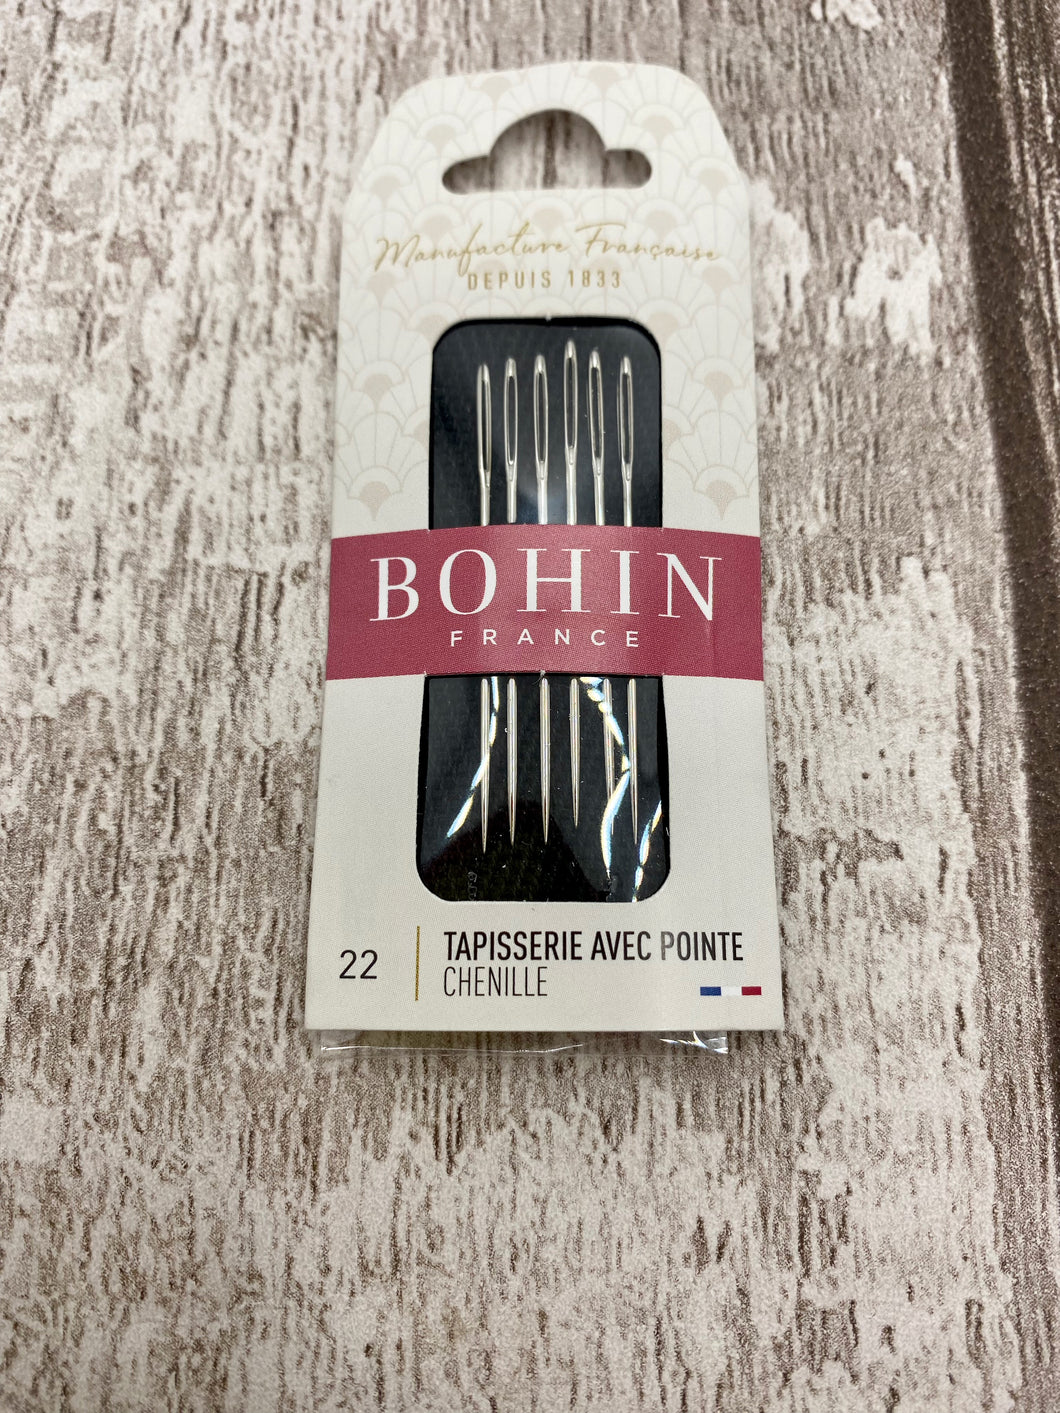 Bohin Chenille Needles, Size 22